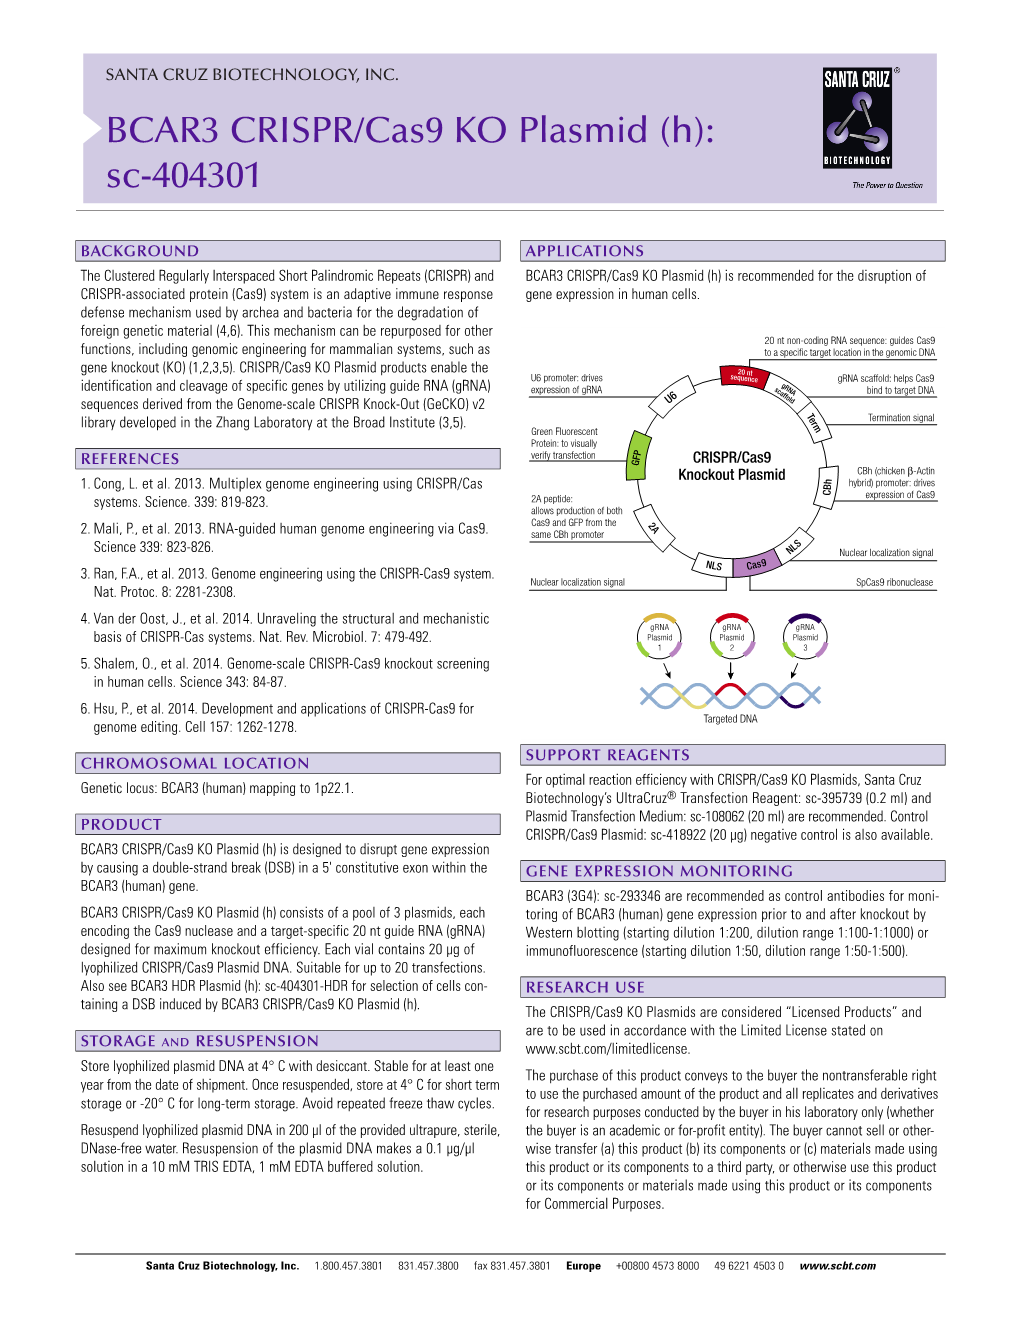 BCAR3 CRISPR/Cas9 KO Plasmid (H): Sc-404301